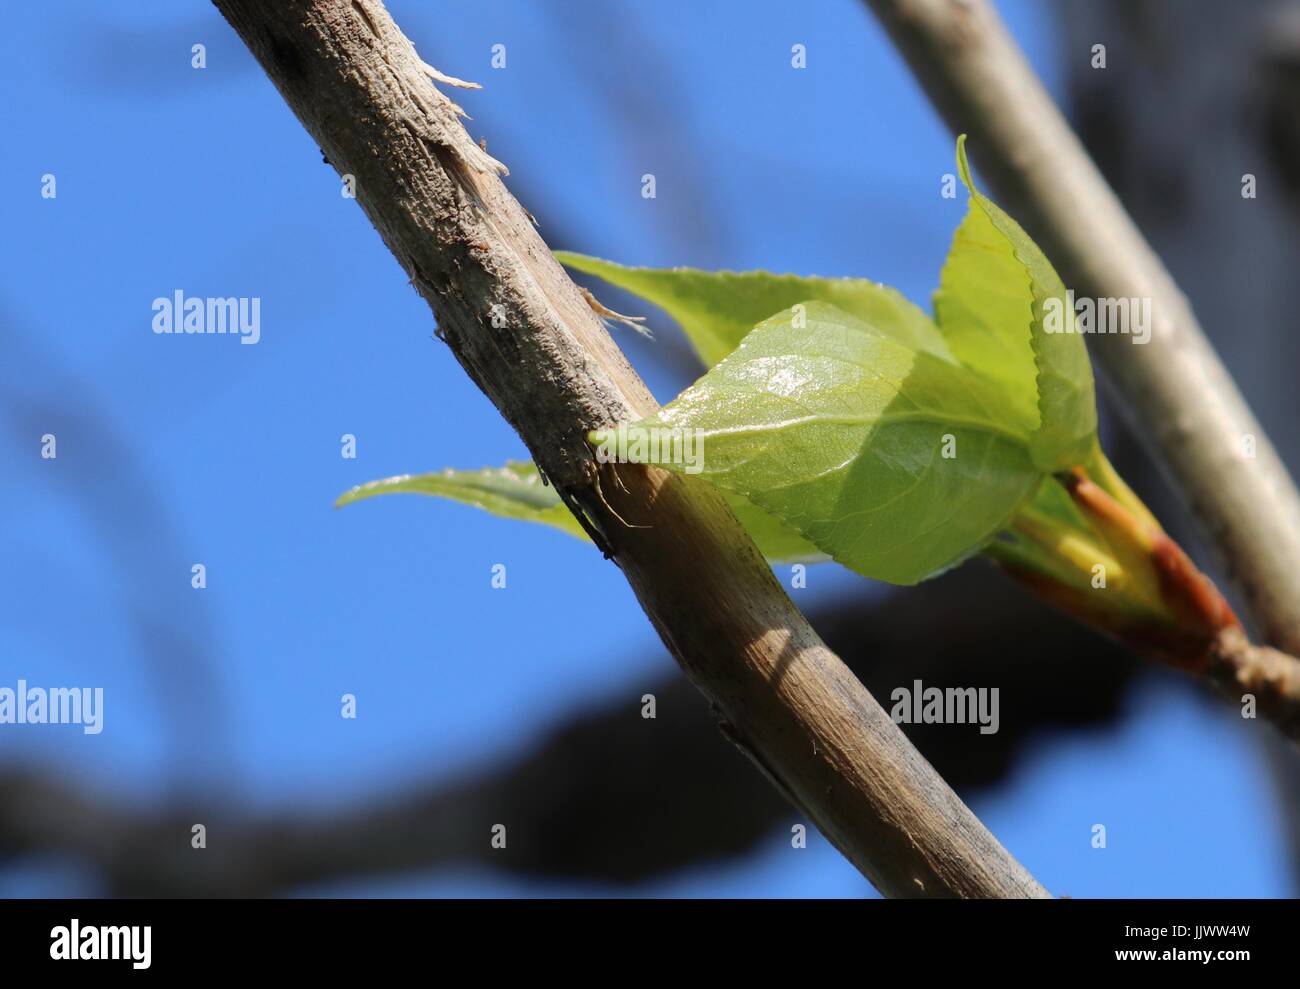 New Tree Leaf Stock Photo